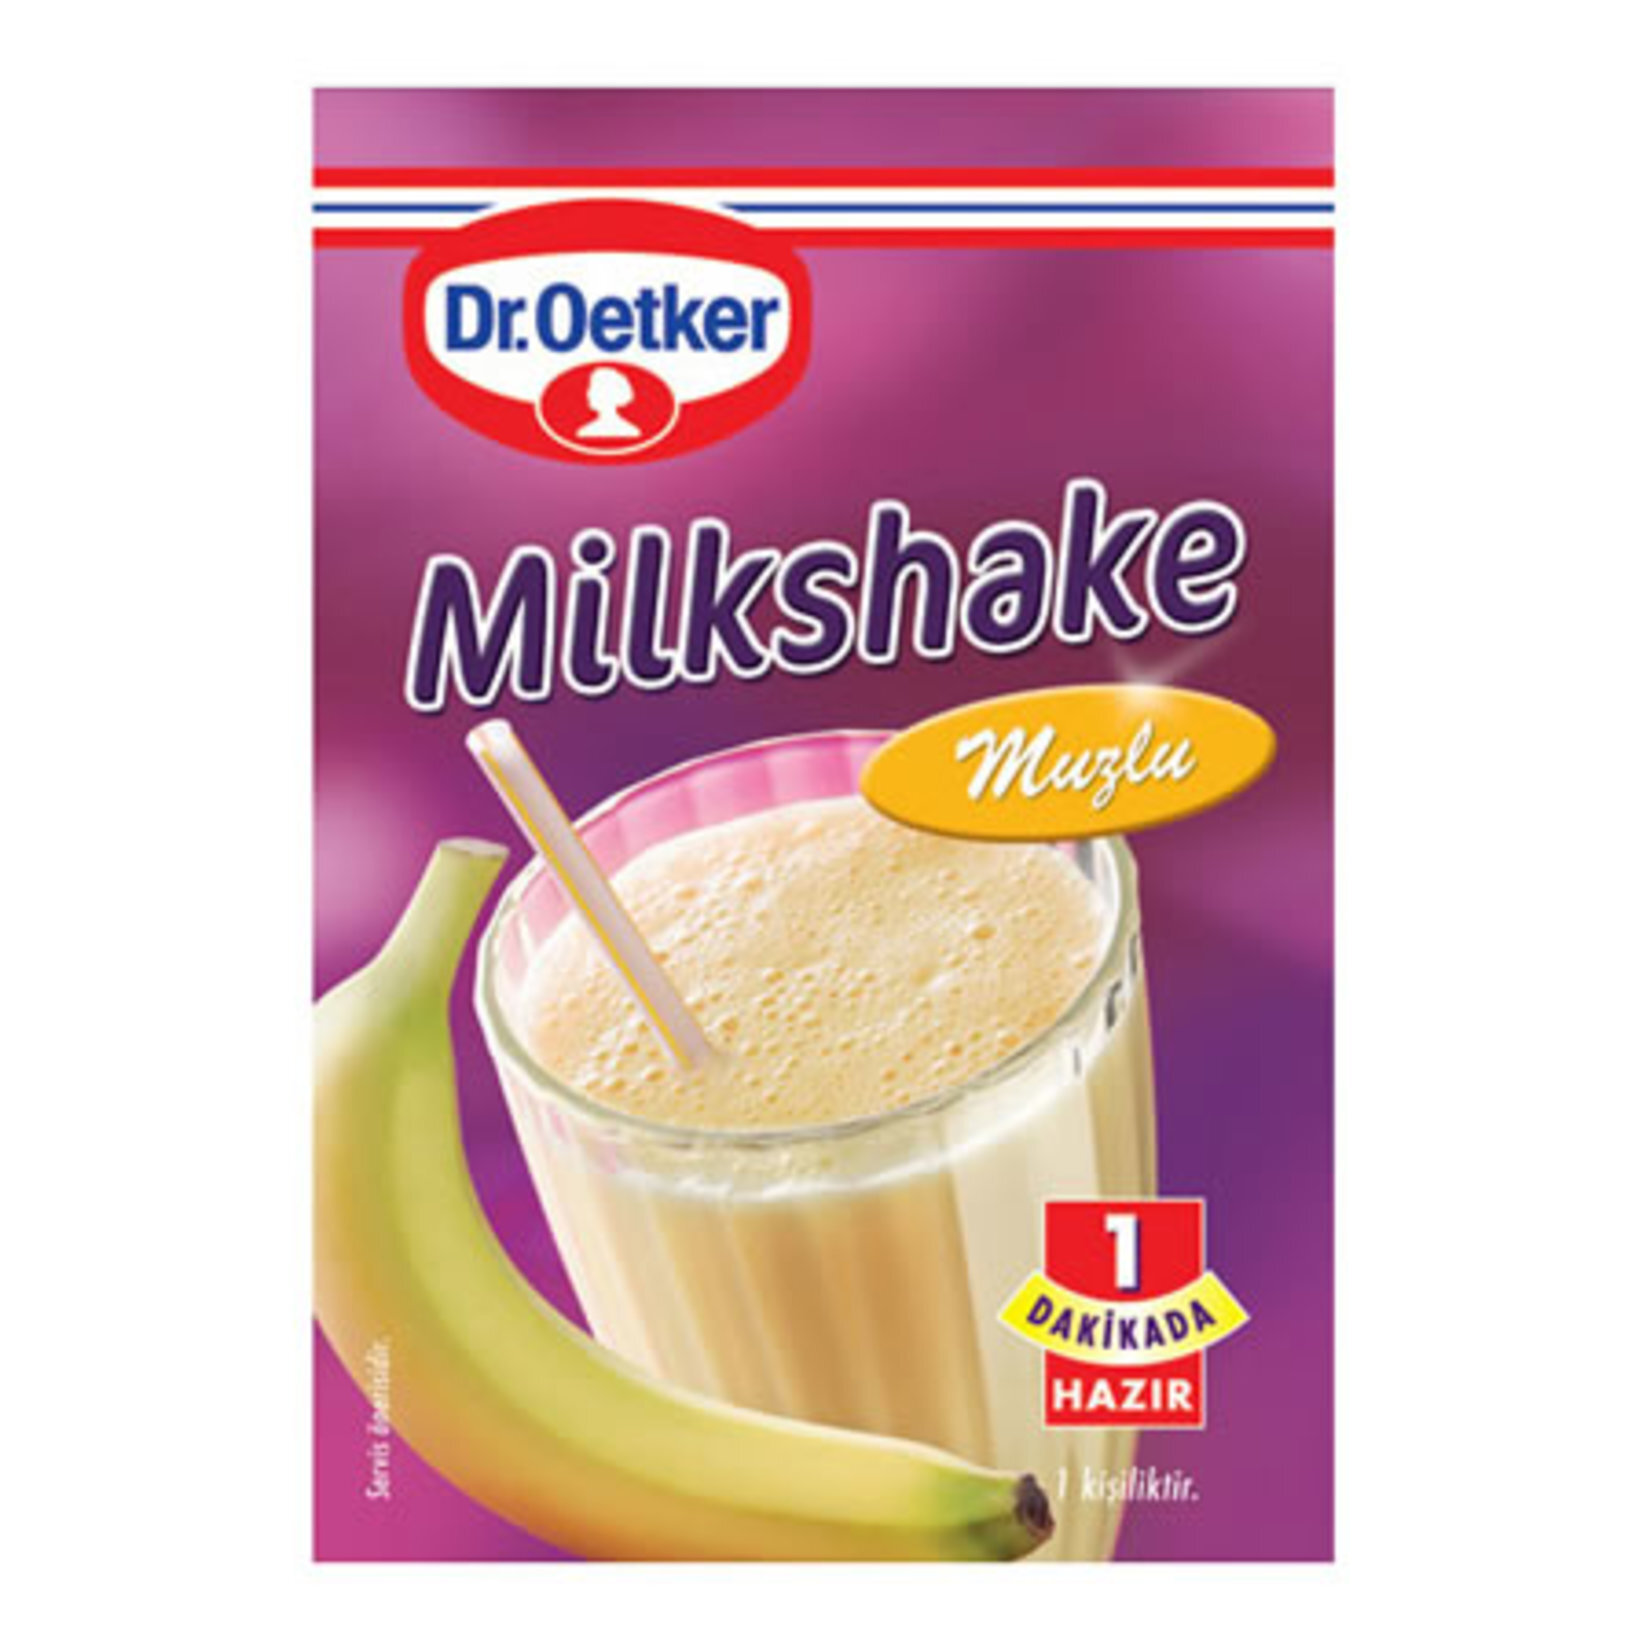 resm Dr.Oetker Milkshake Muzlu 20 g